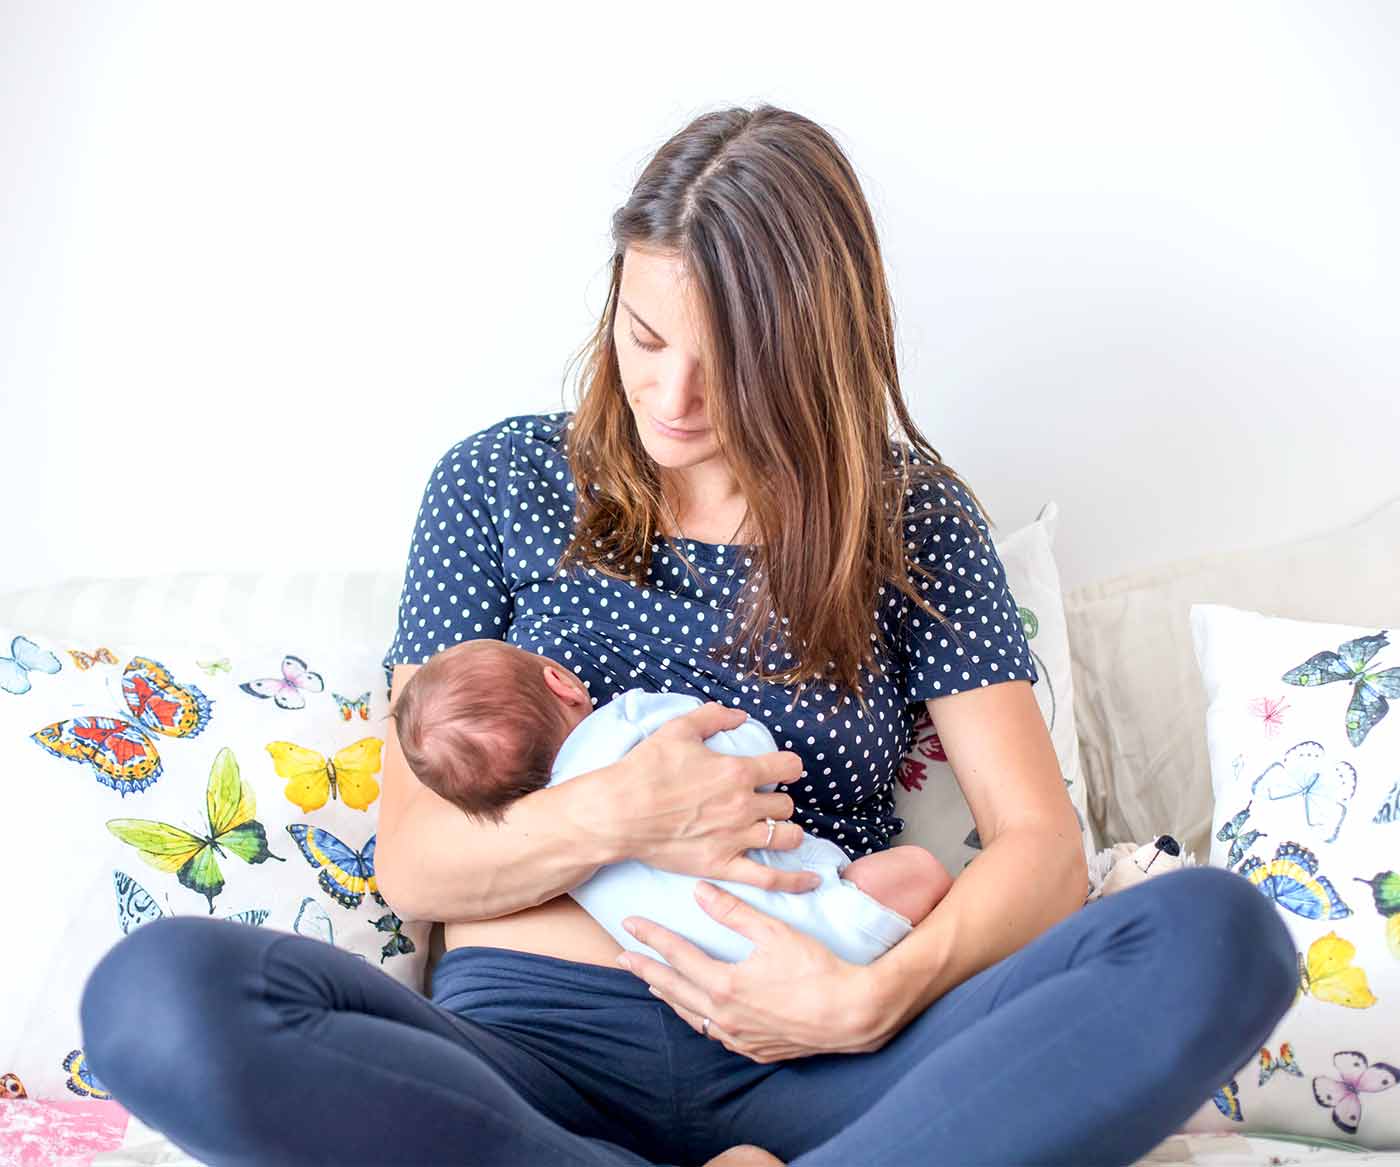 Burping a newborn after breastfeeding